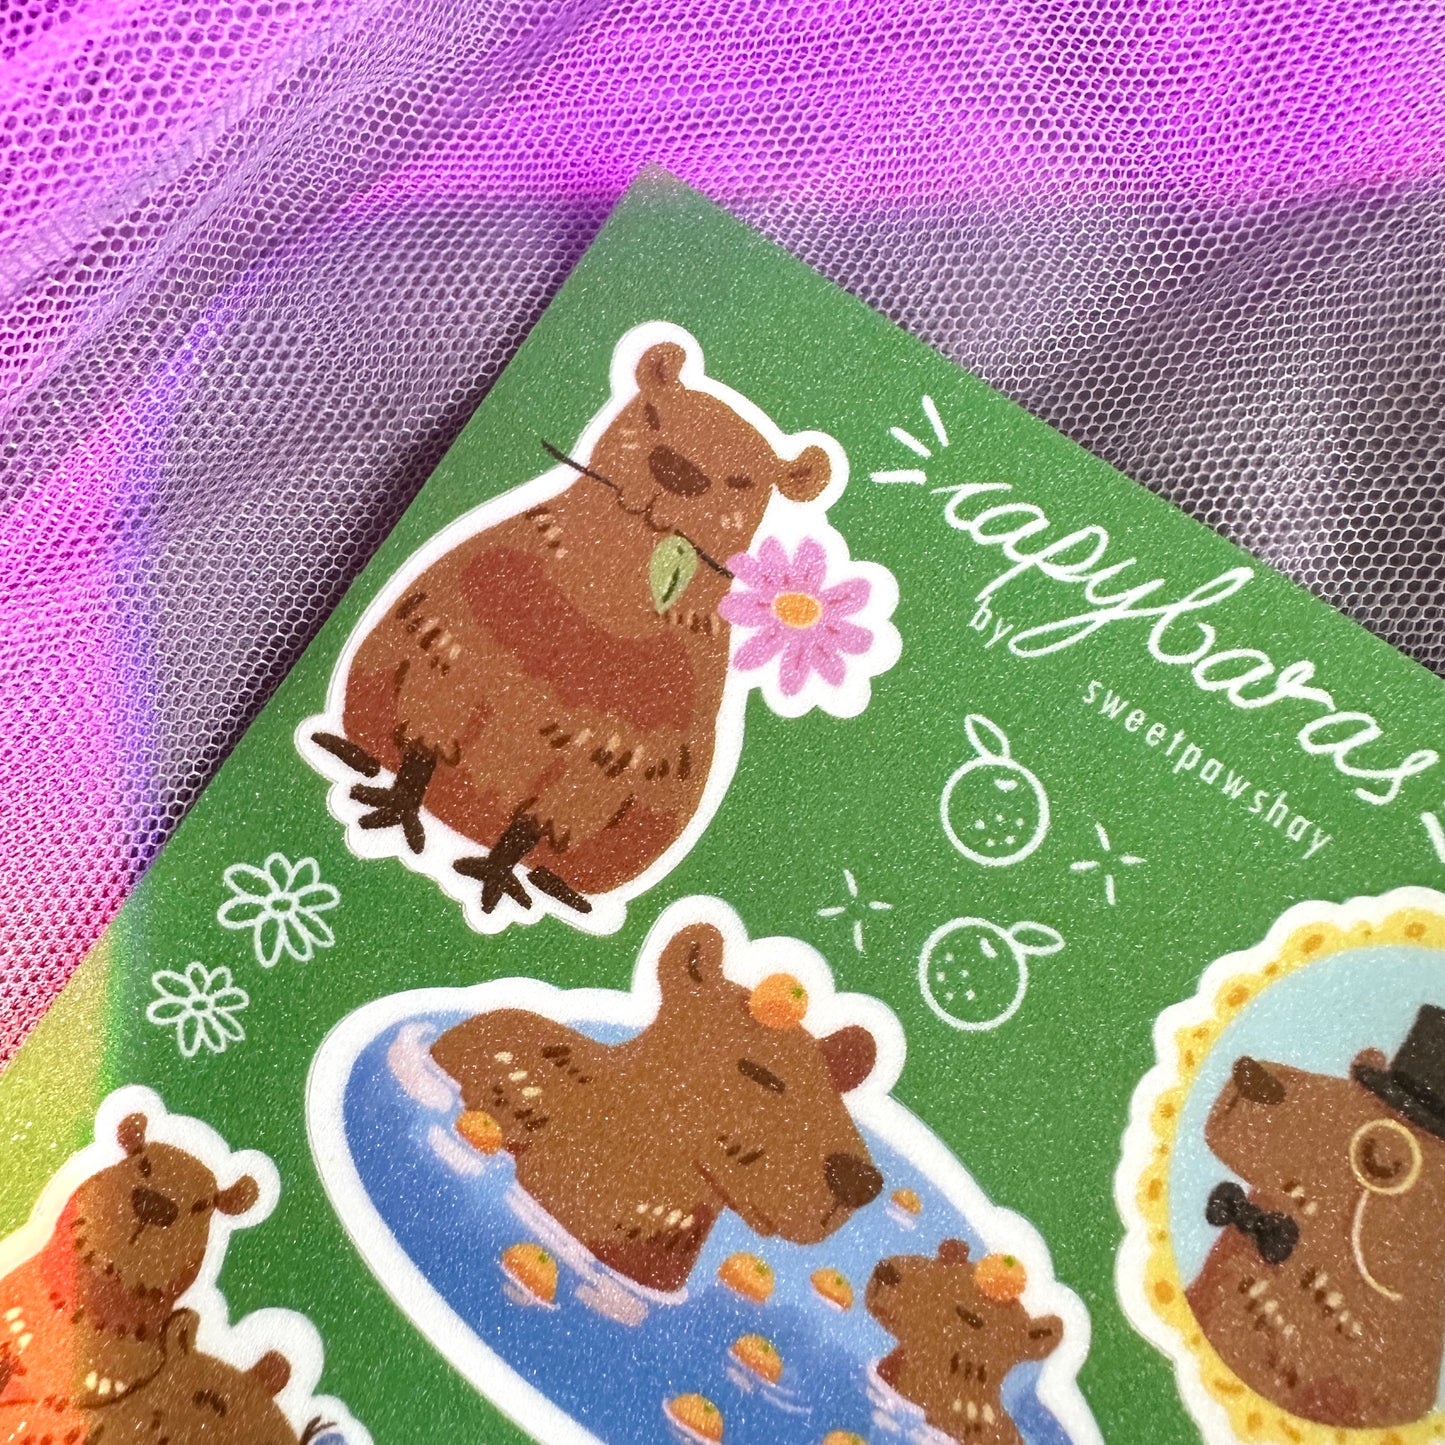 sweetpawshay - Capybara sticker sheet